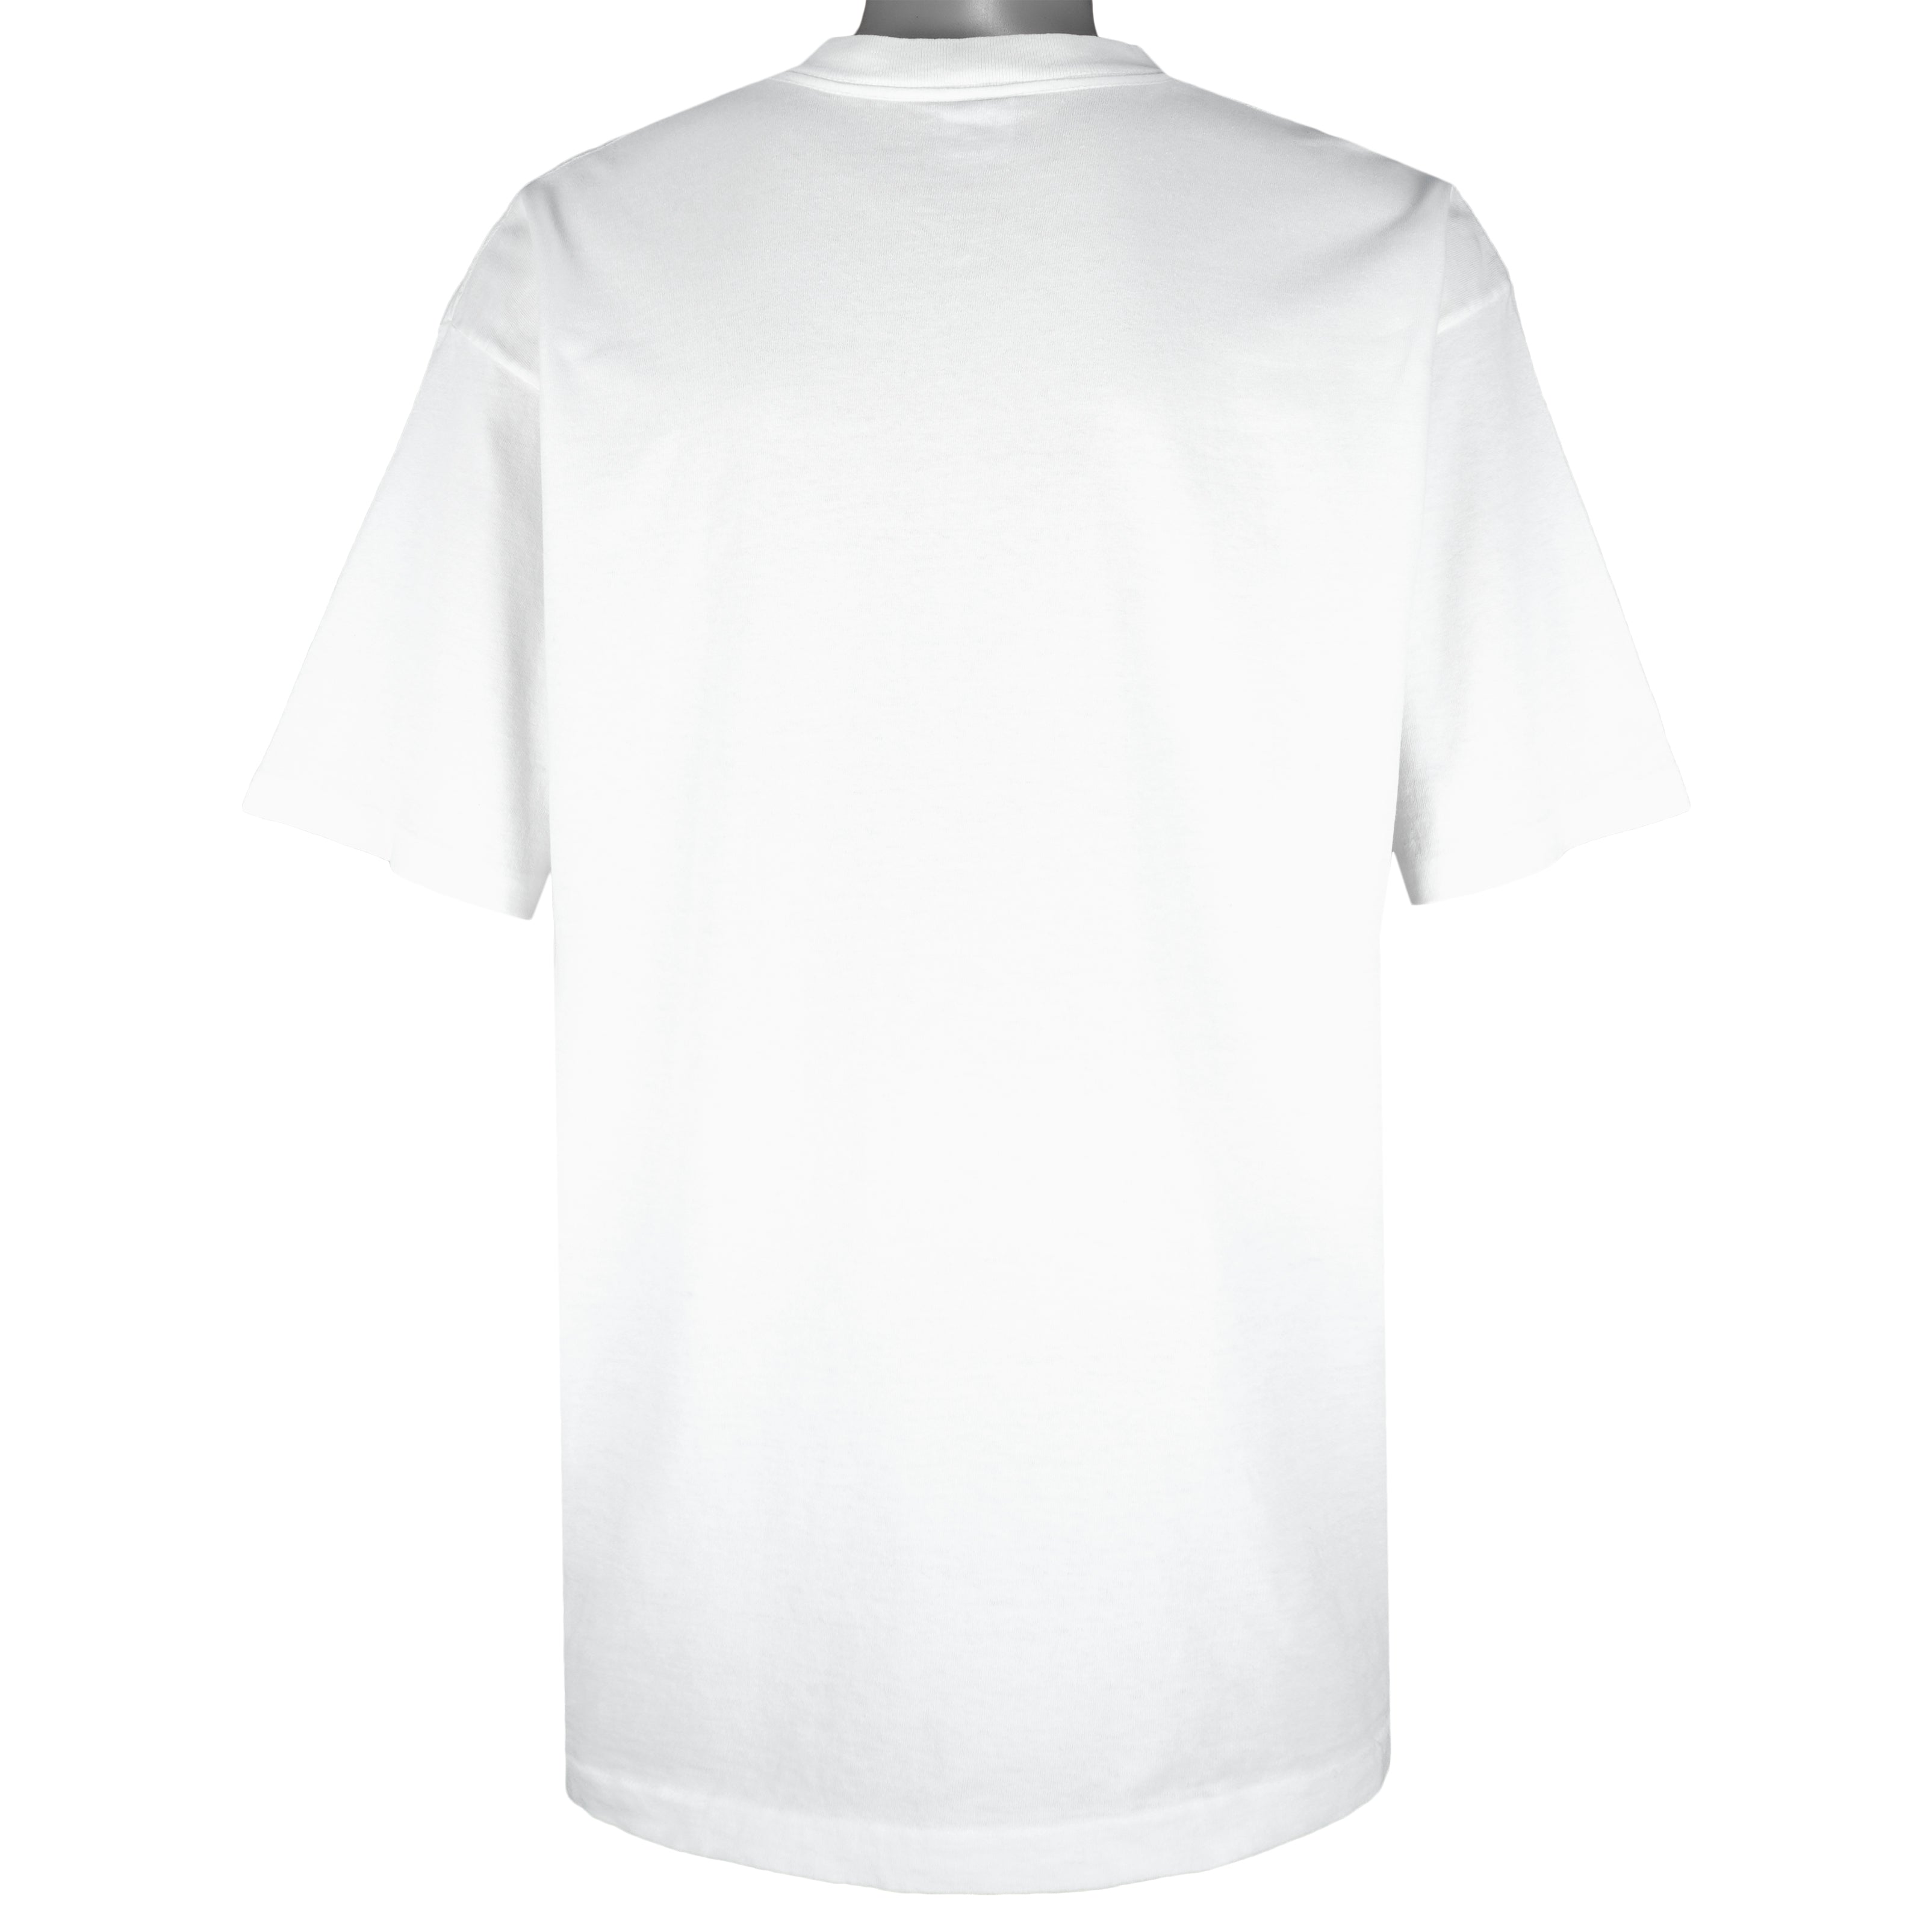 Gretzky & LeMieux '87 - Team Canada Legends Political Campaign Parody T-Shirt - Hyper Than Hype Shirts 3XL / White Shirt